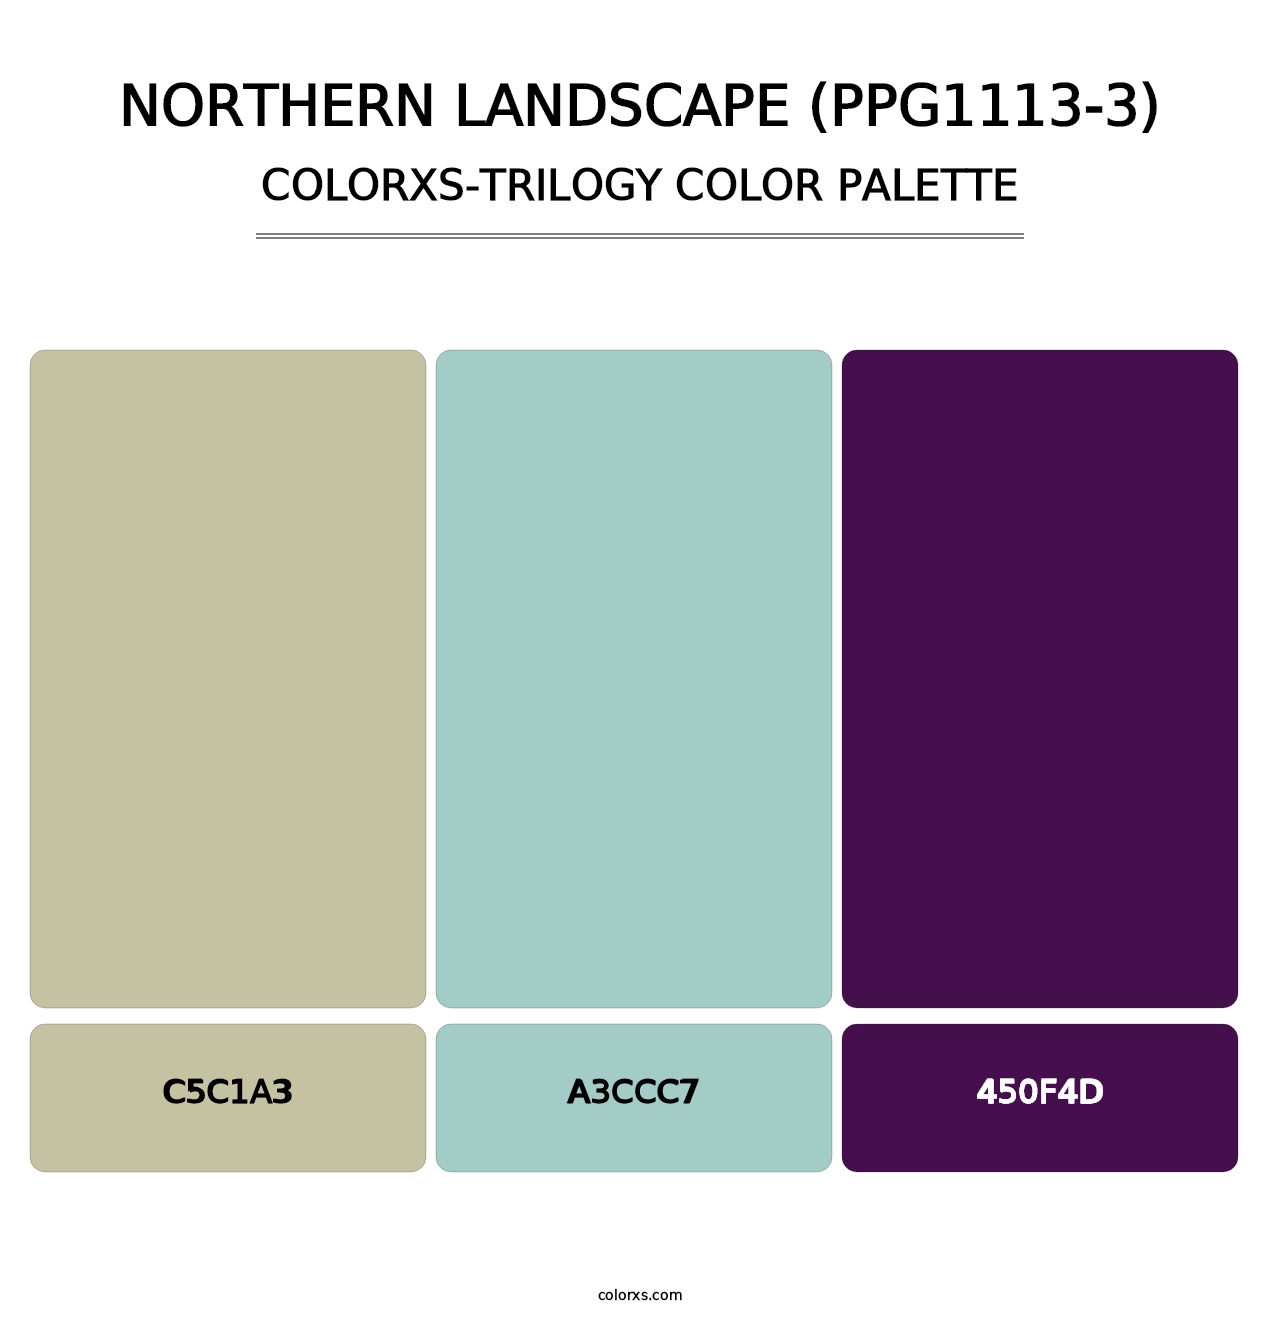 Northern Landscape (PPG1113-3) - Colorxs Trilogy Palette